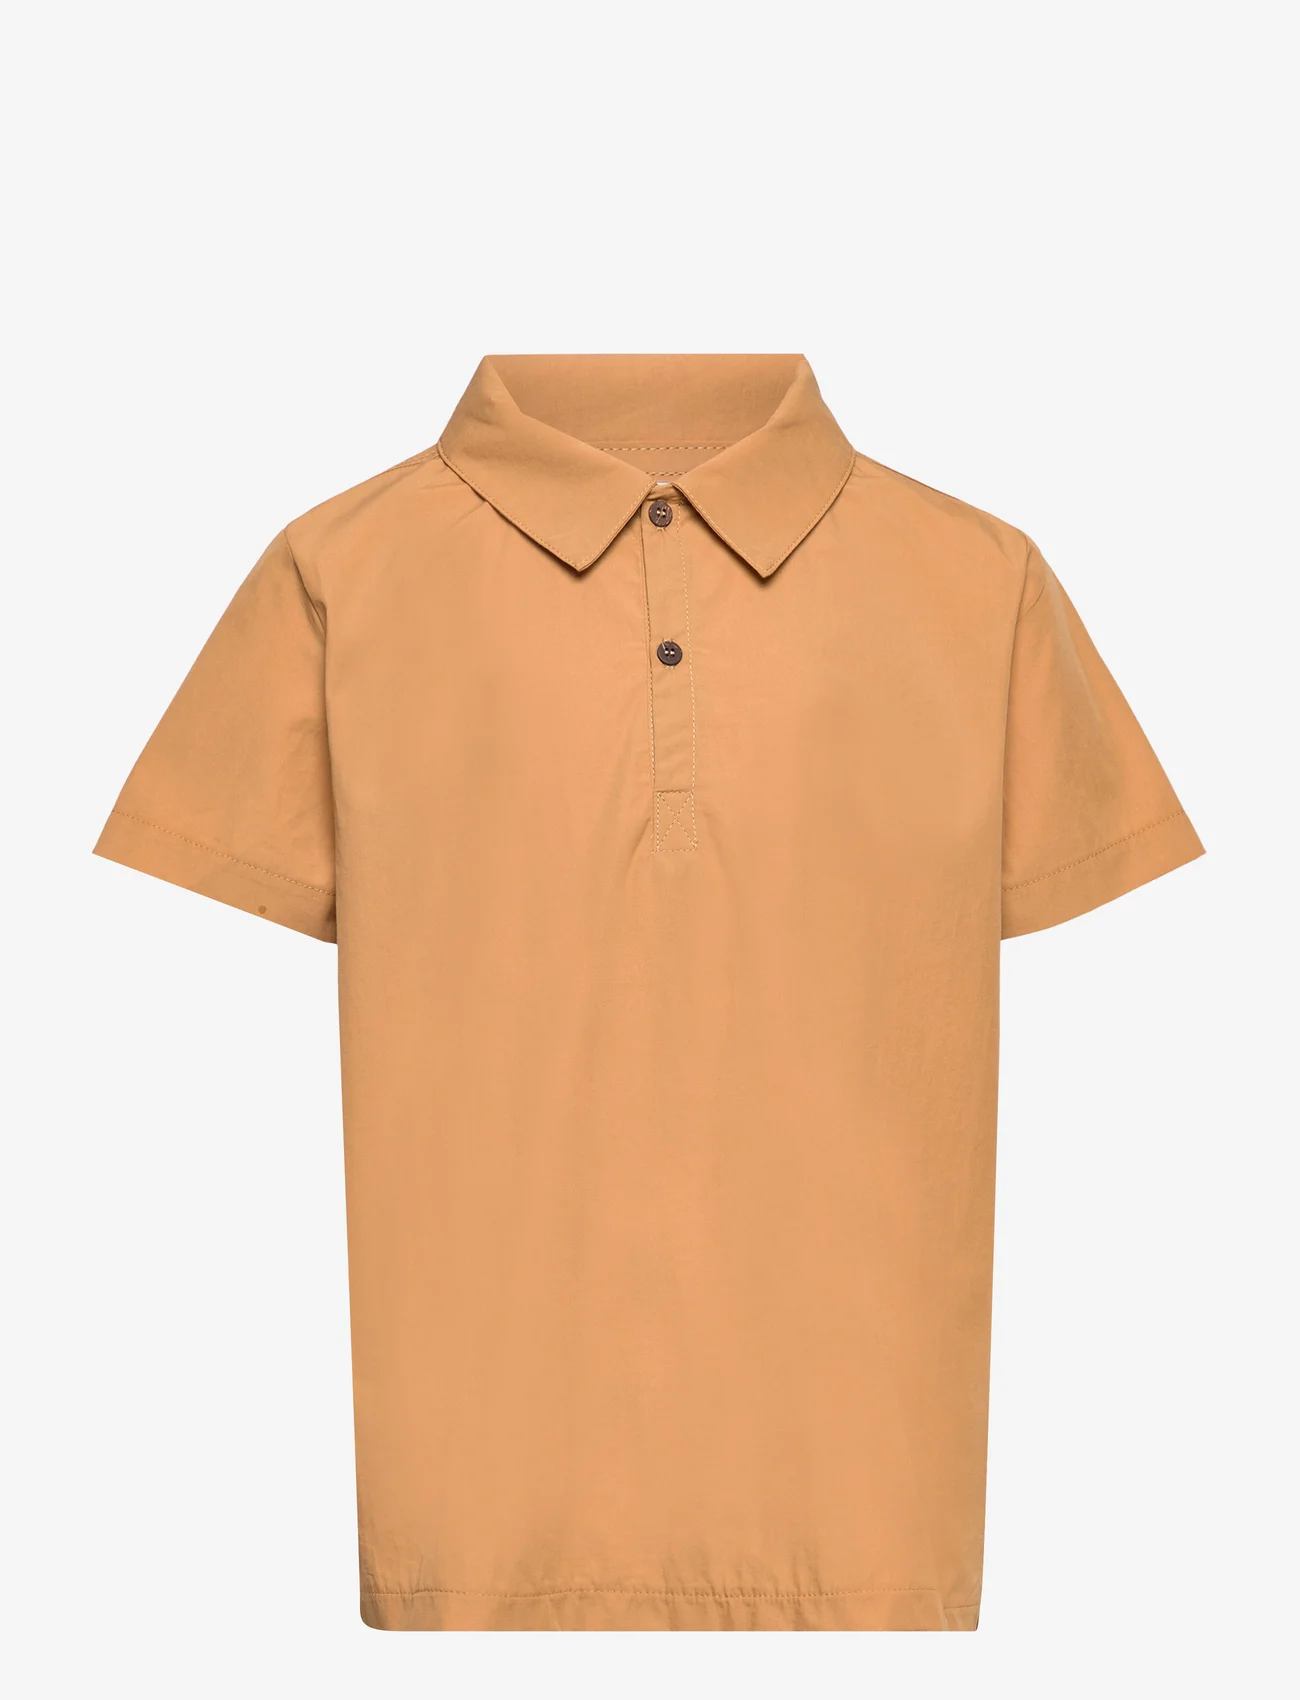 Müsli by Green Cotton - Poplin s/s shirt - polo shirts - cinnamon - 0